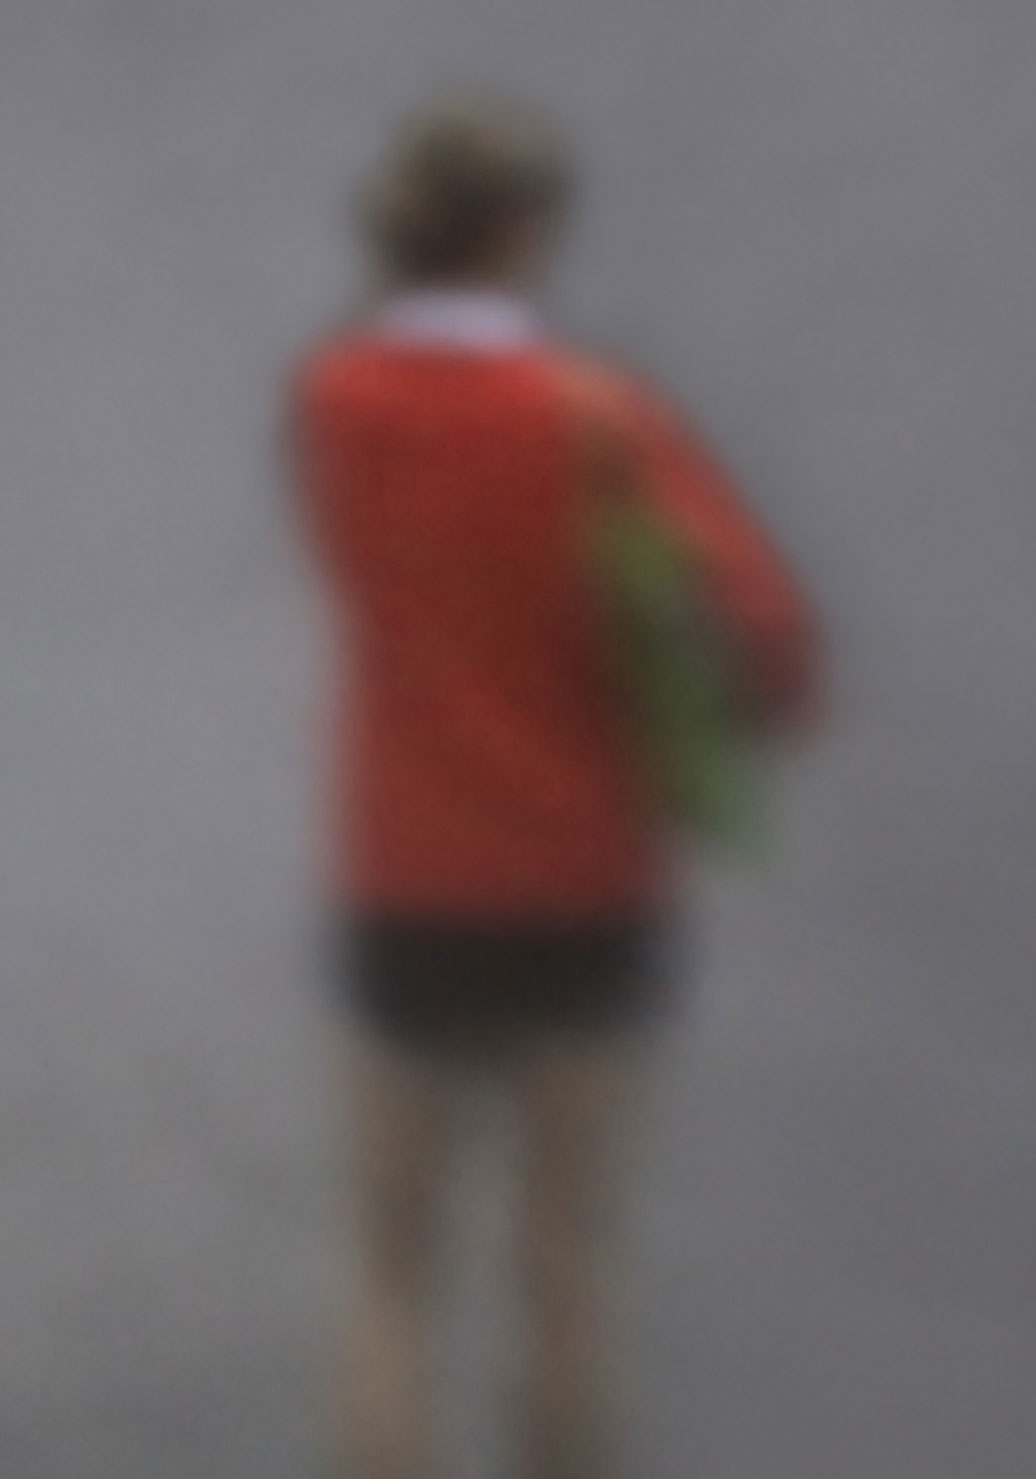 33 „Rote Jacke“, 2012, Köln, Camera Obscura, Pigmentdruck auf Alu-Dibond